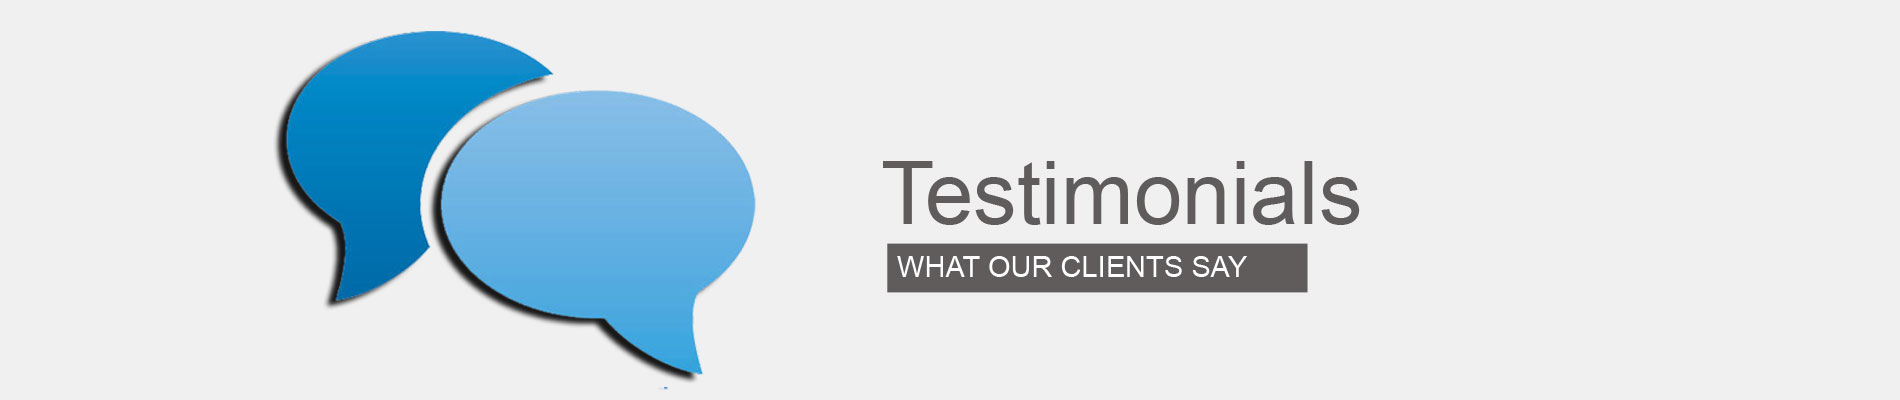 client testimonials page